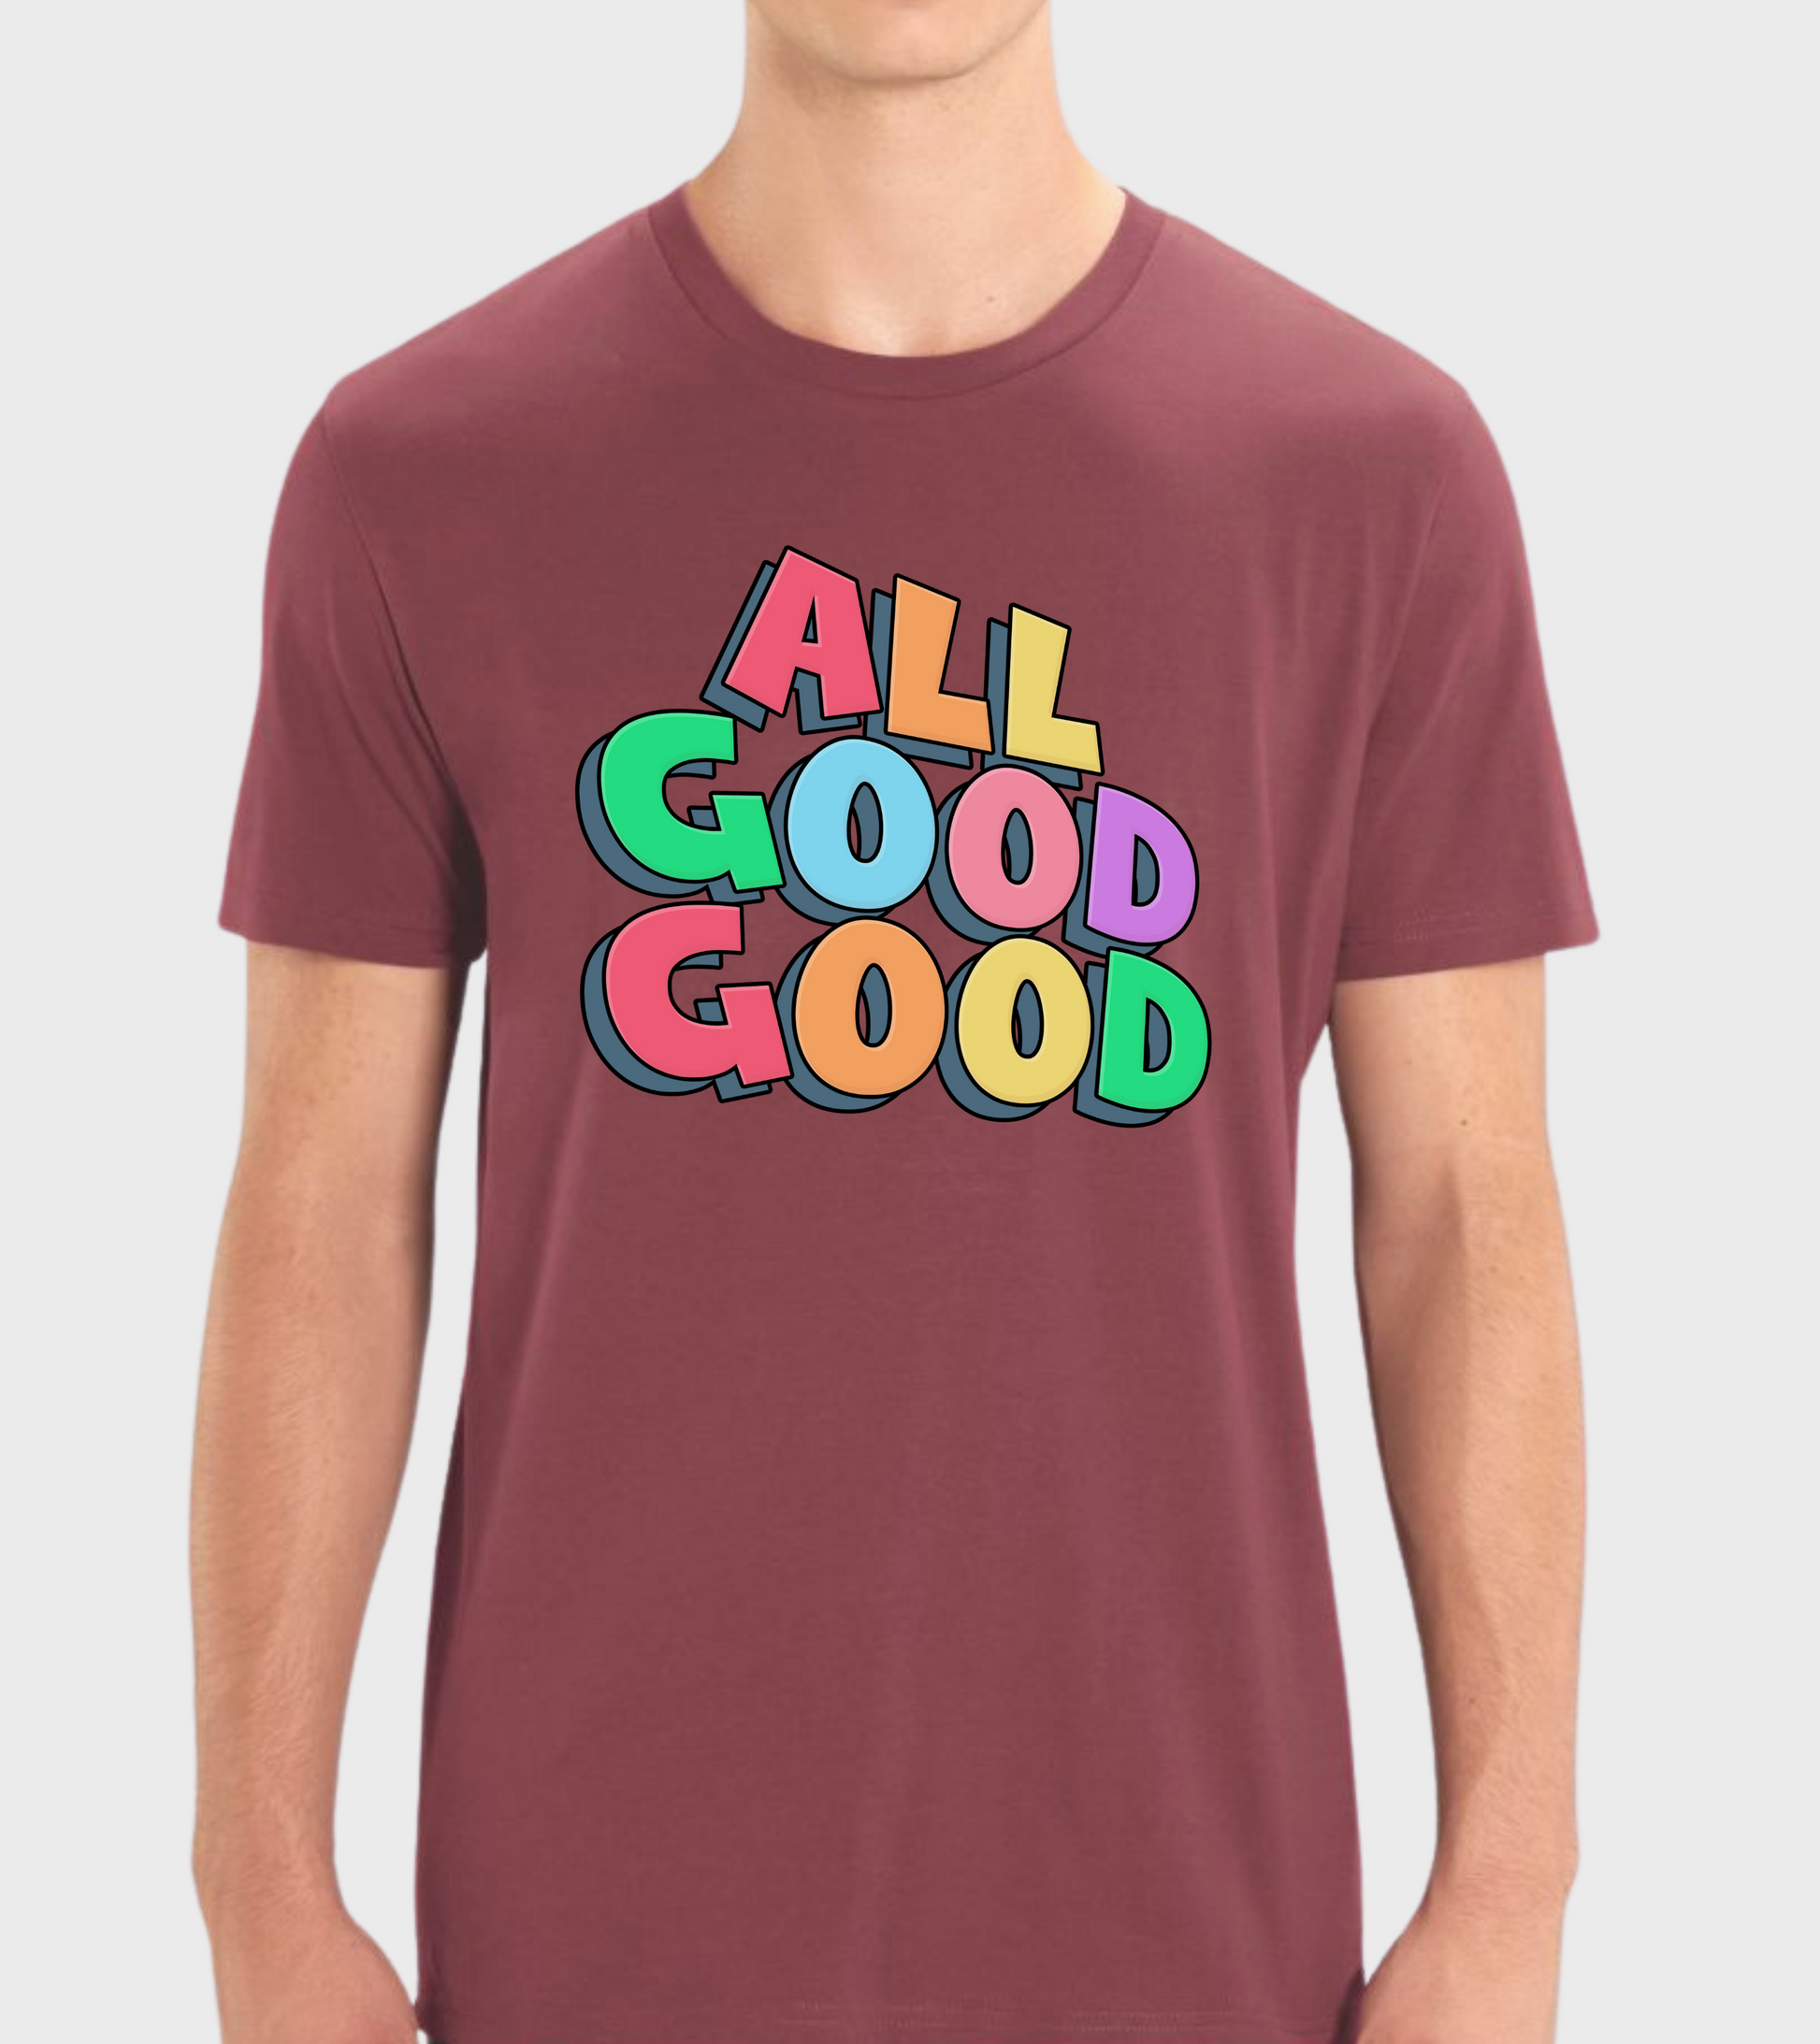 Burgundy regular fit t-shirt with 'ALL GOOD GOOD' design.